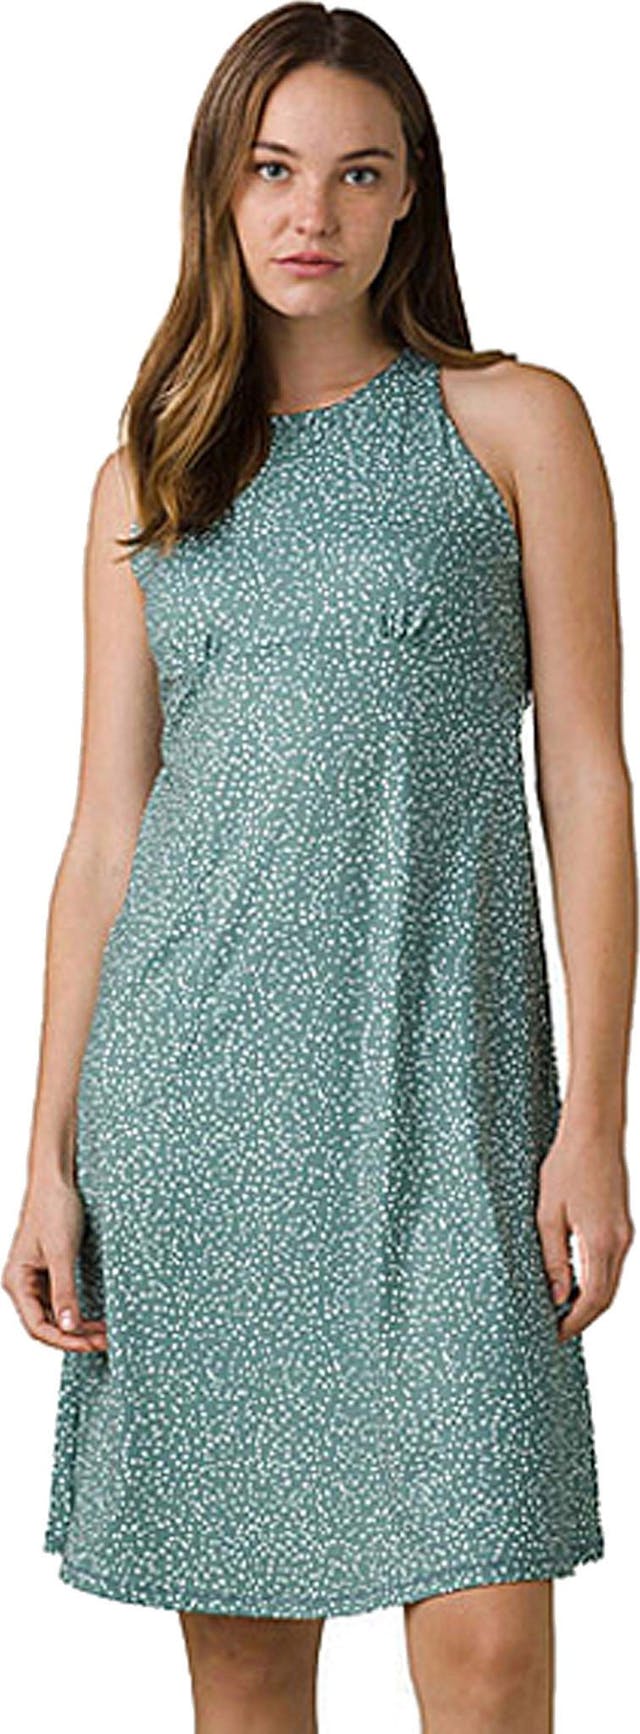 Product image for Jewel Lake Dress - Women's